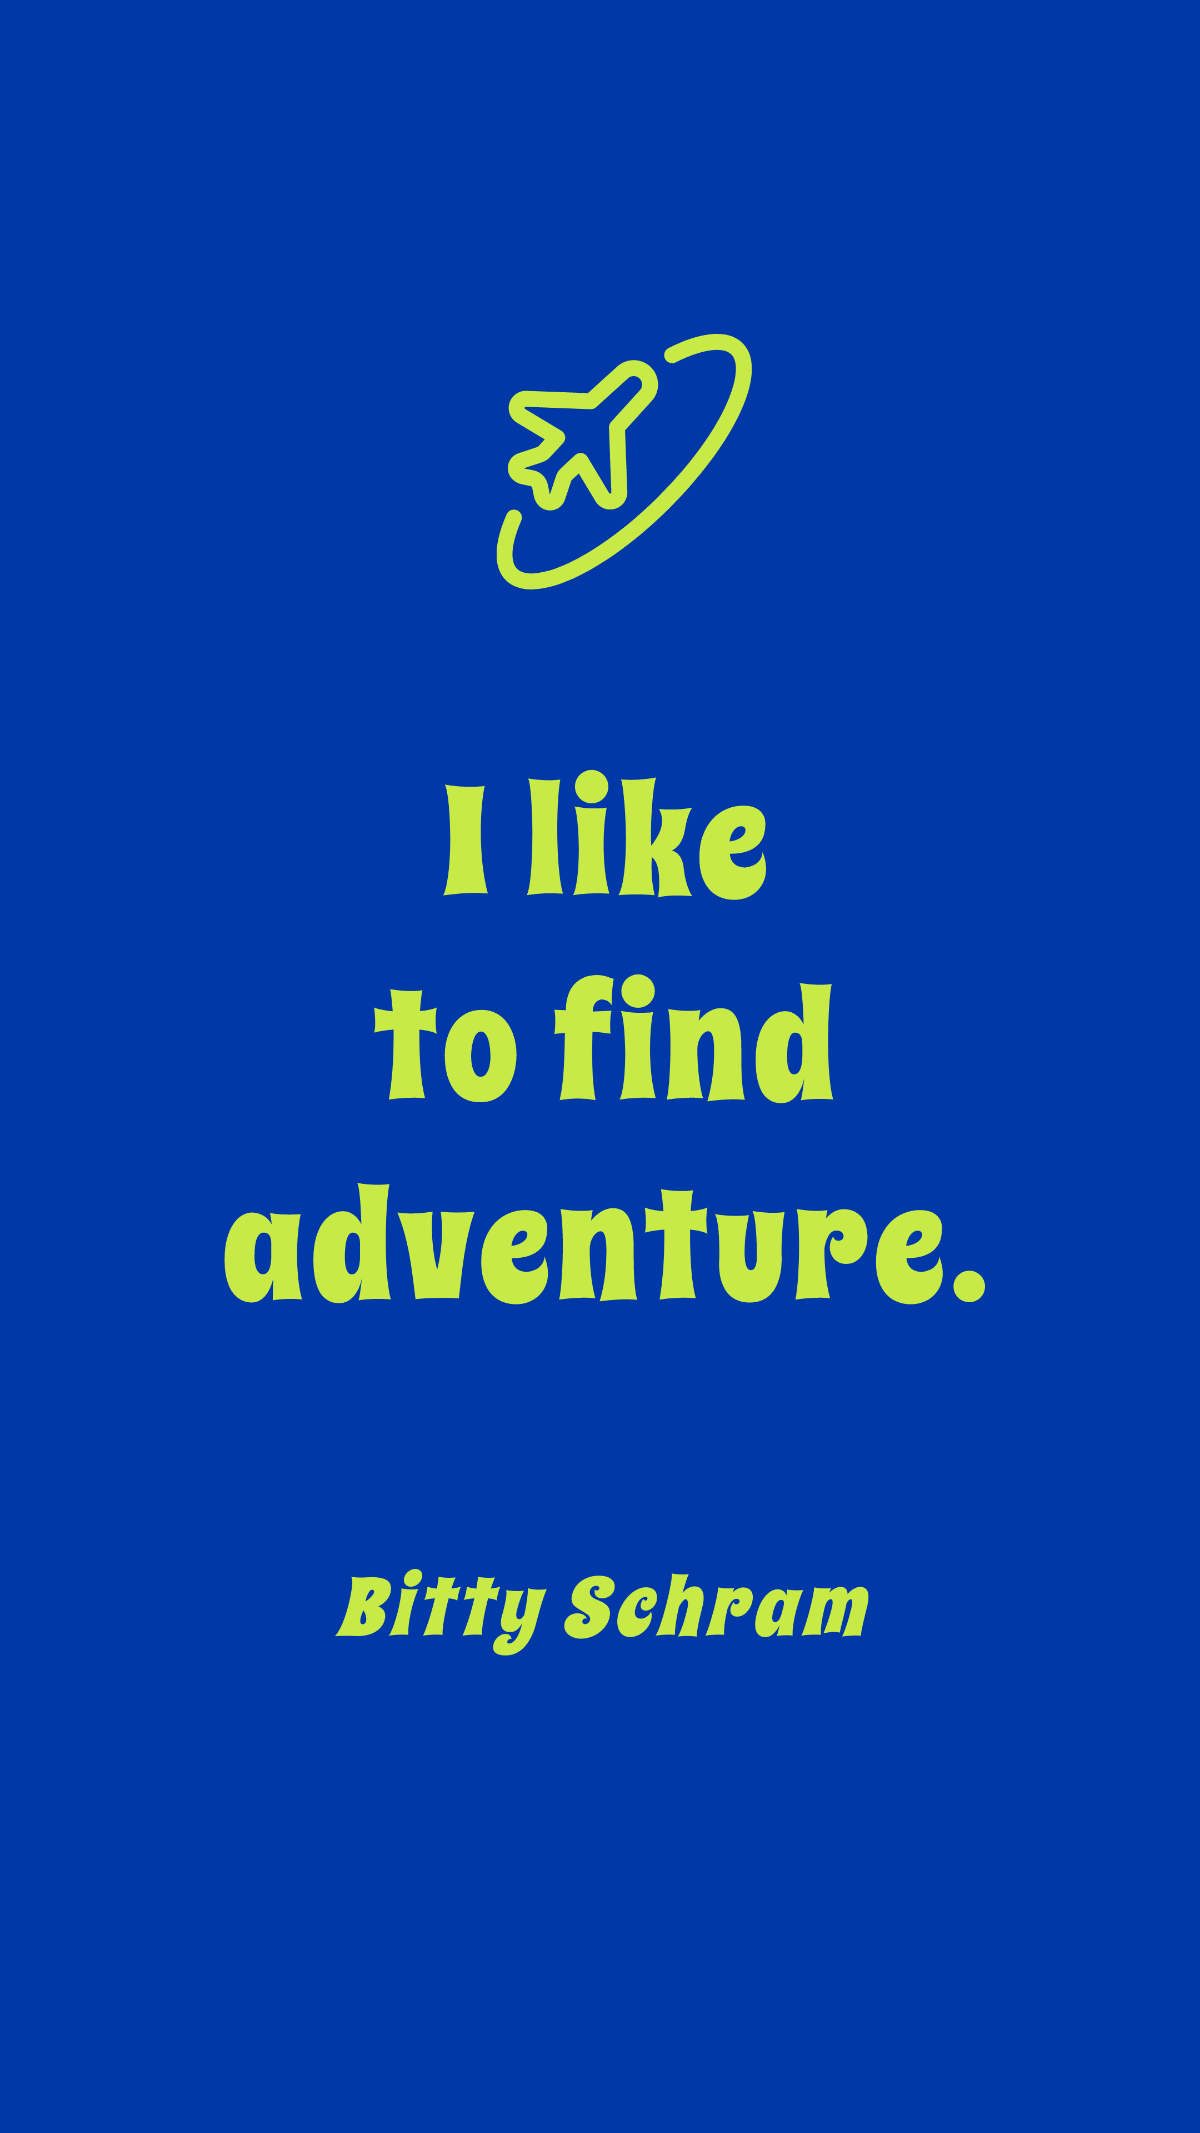 Bitty Schram - I like to find adventure.